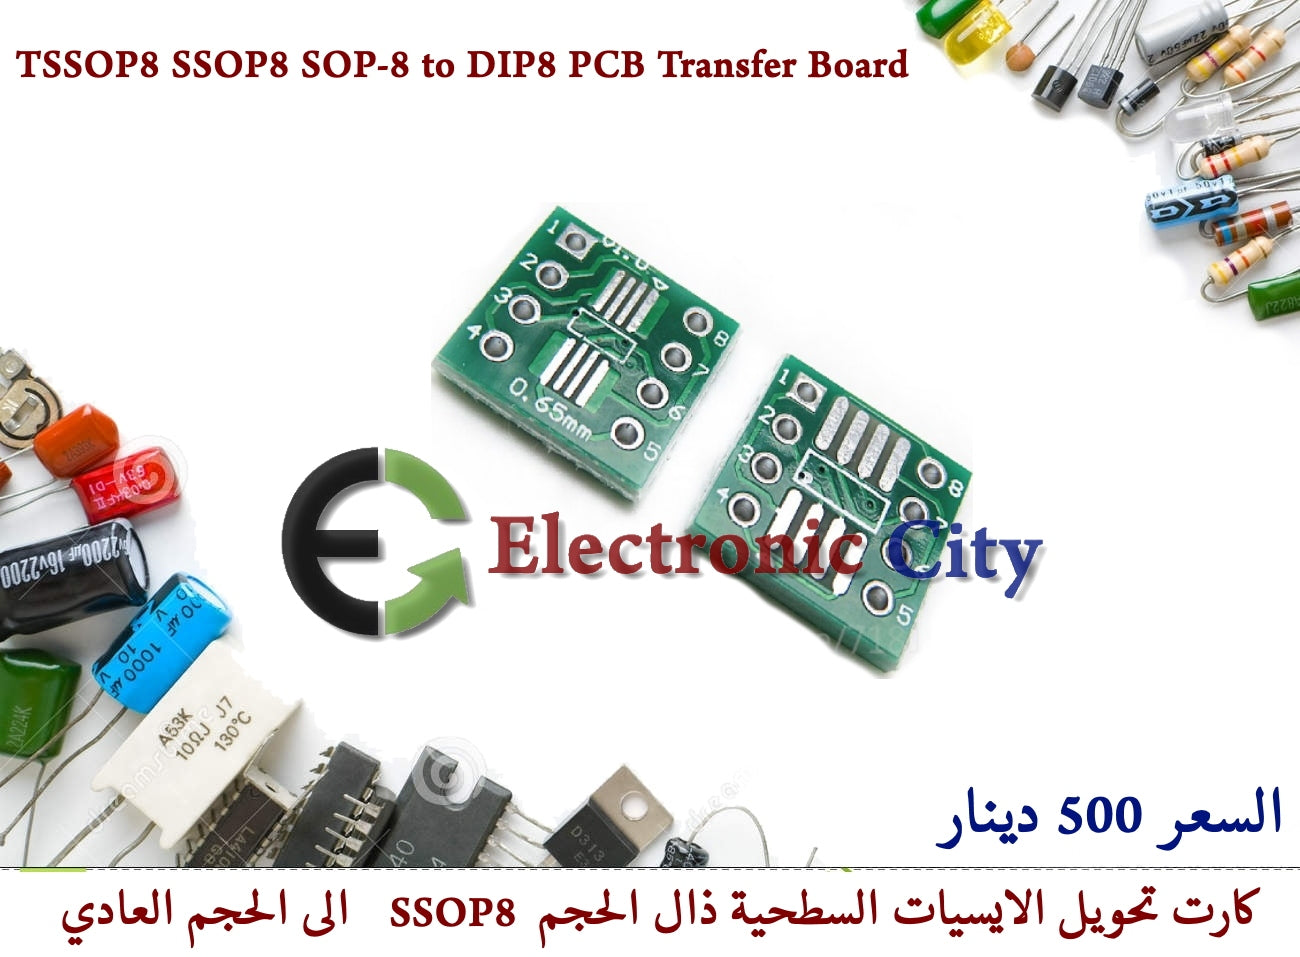 TSSOP8 SSOP8 SOP-8 to DIP8 PCB Transfer Board  03004210